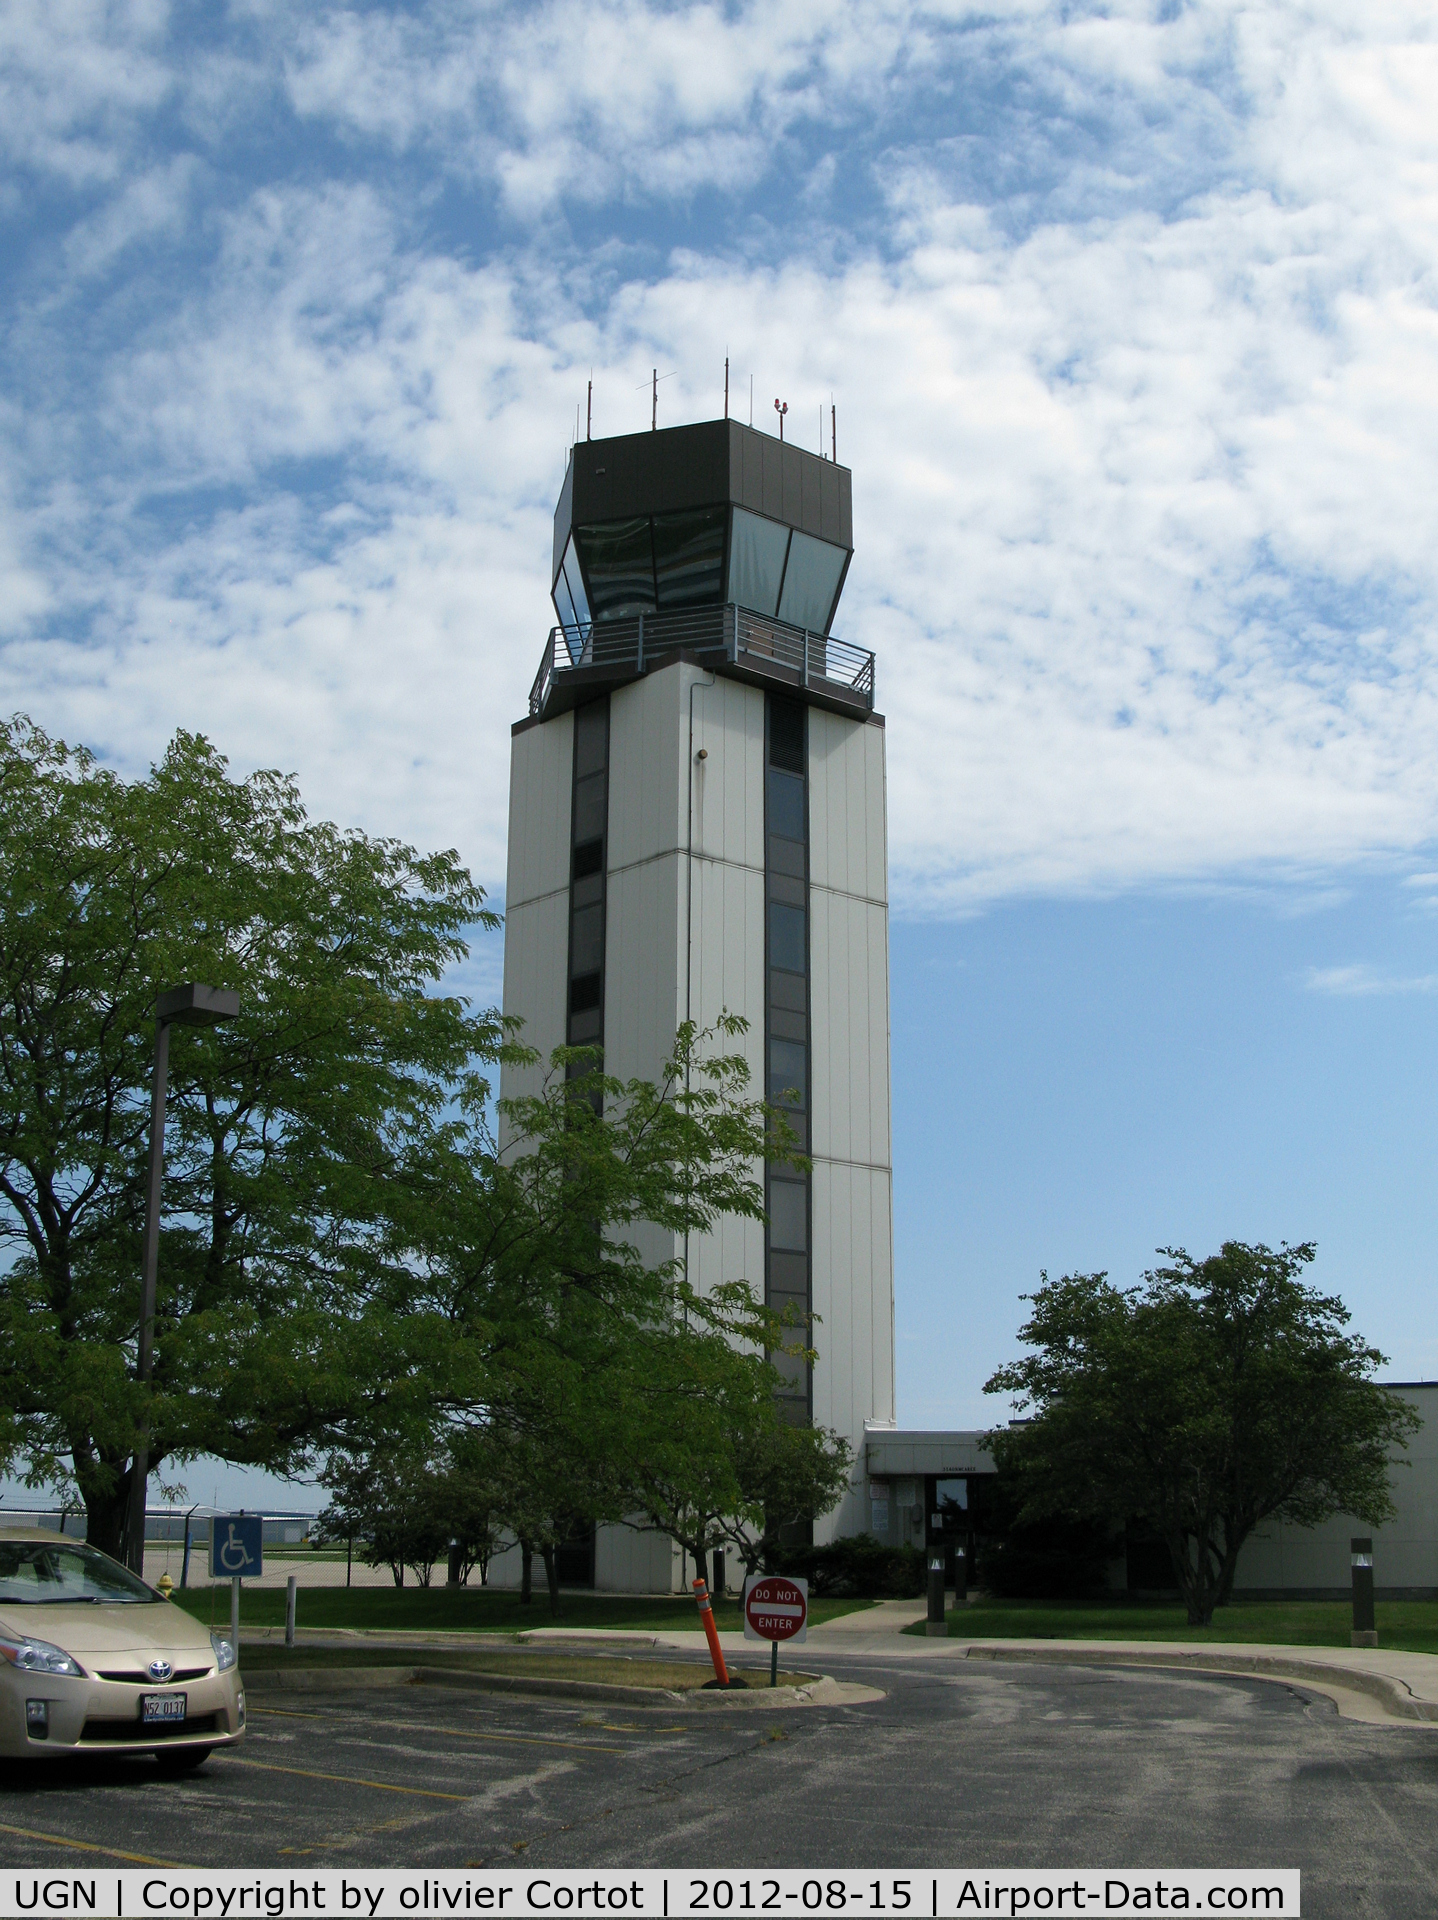 Waukegan Regional Airport (UGN) - the control tower